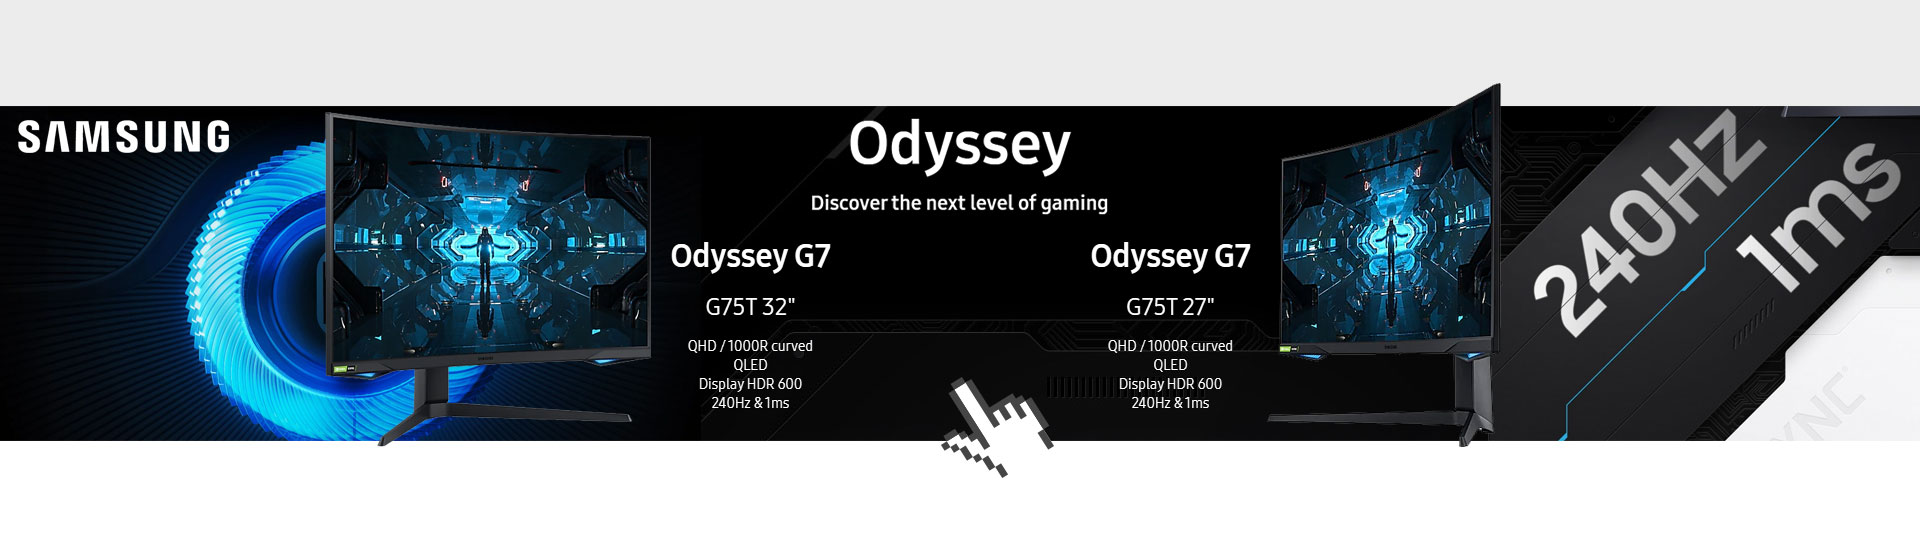 Samsung Odyssey_en